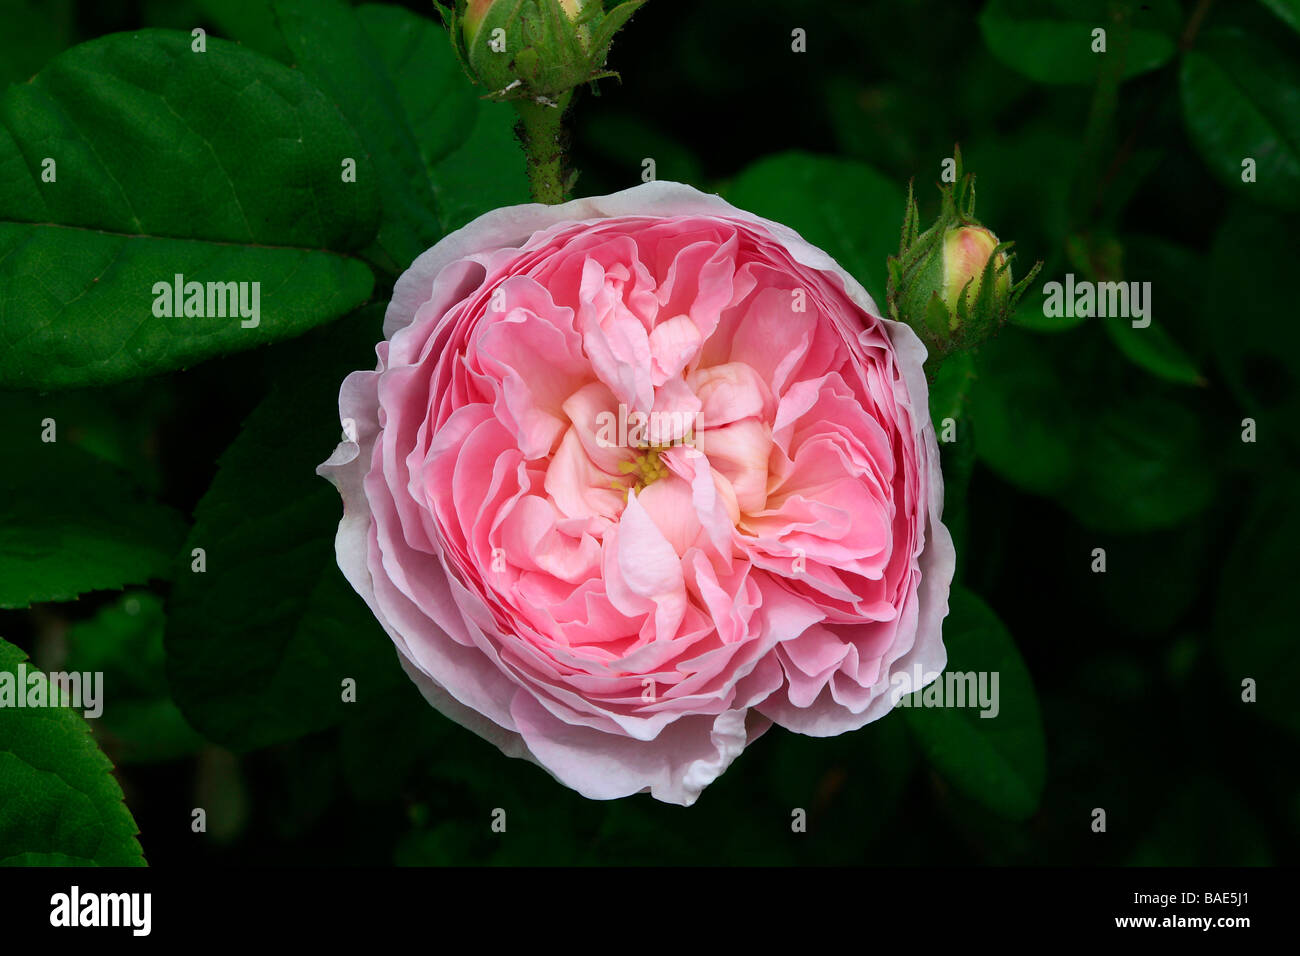 Portland rose 'Comte de Chambord' Stock Photo